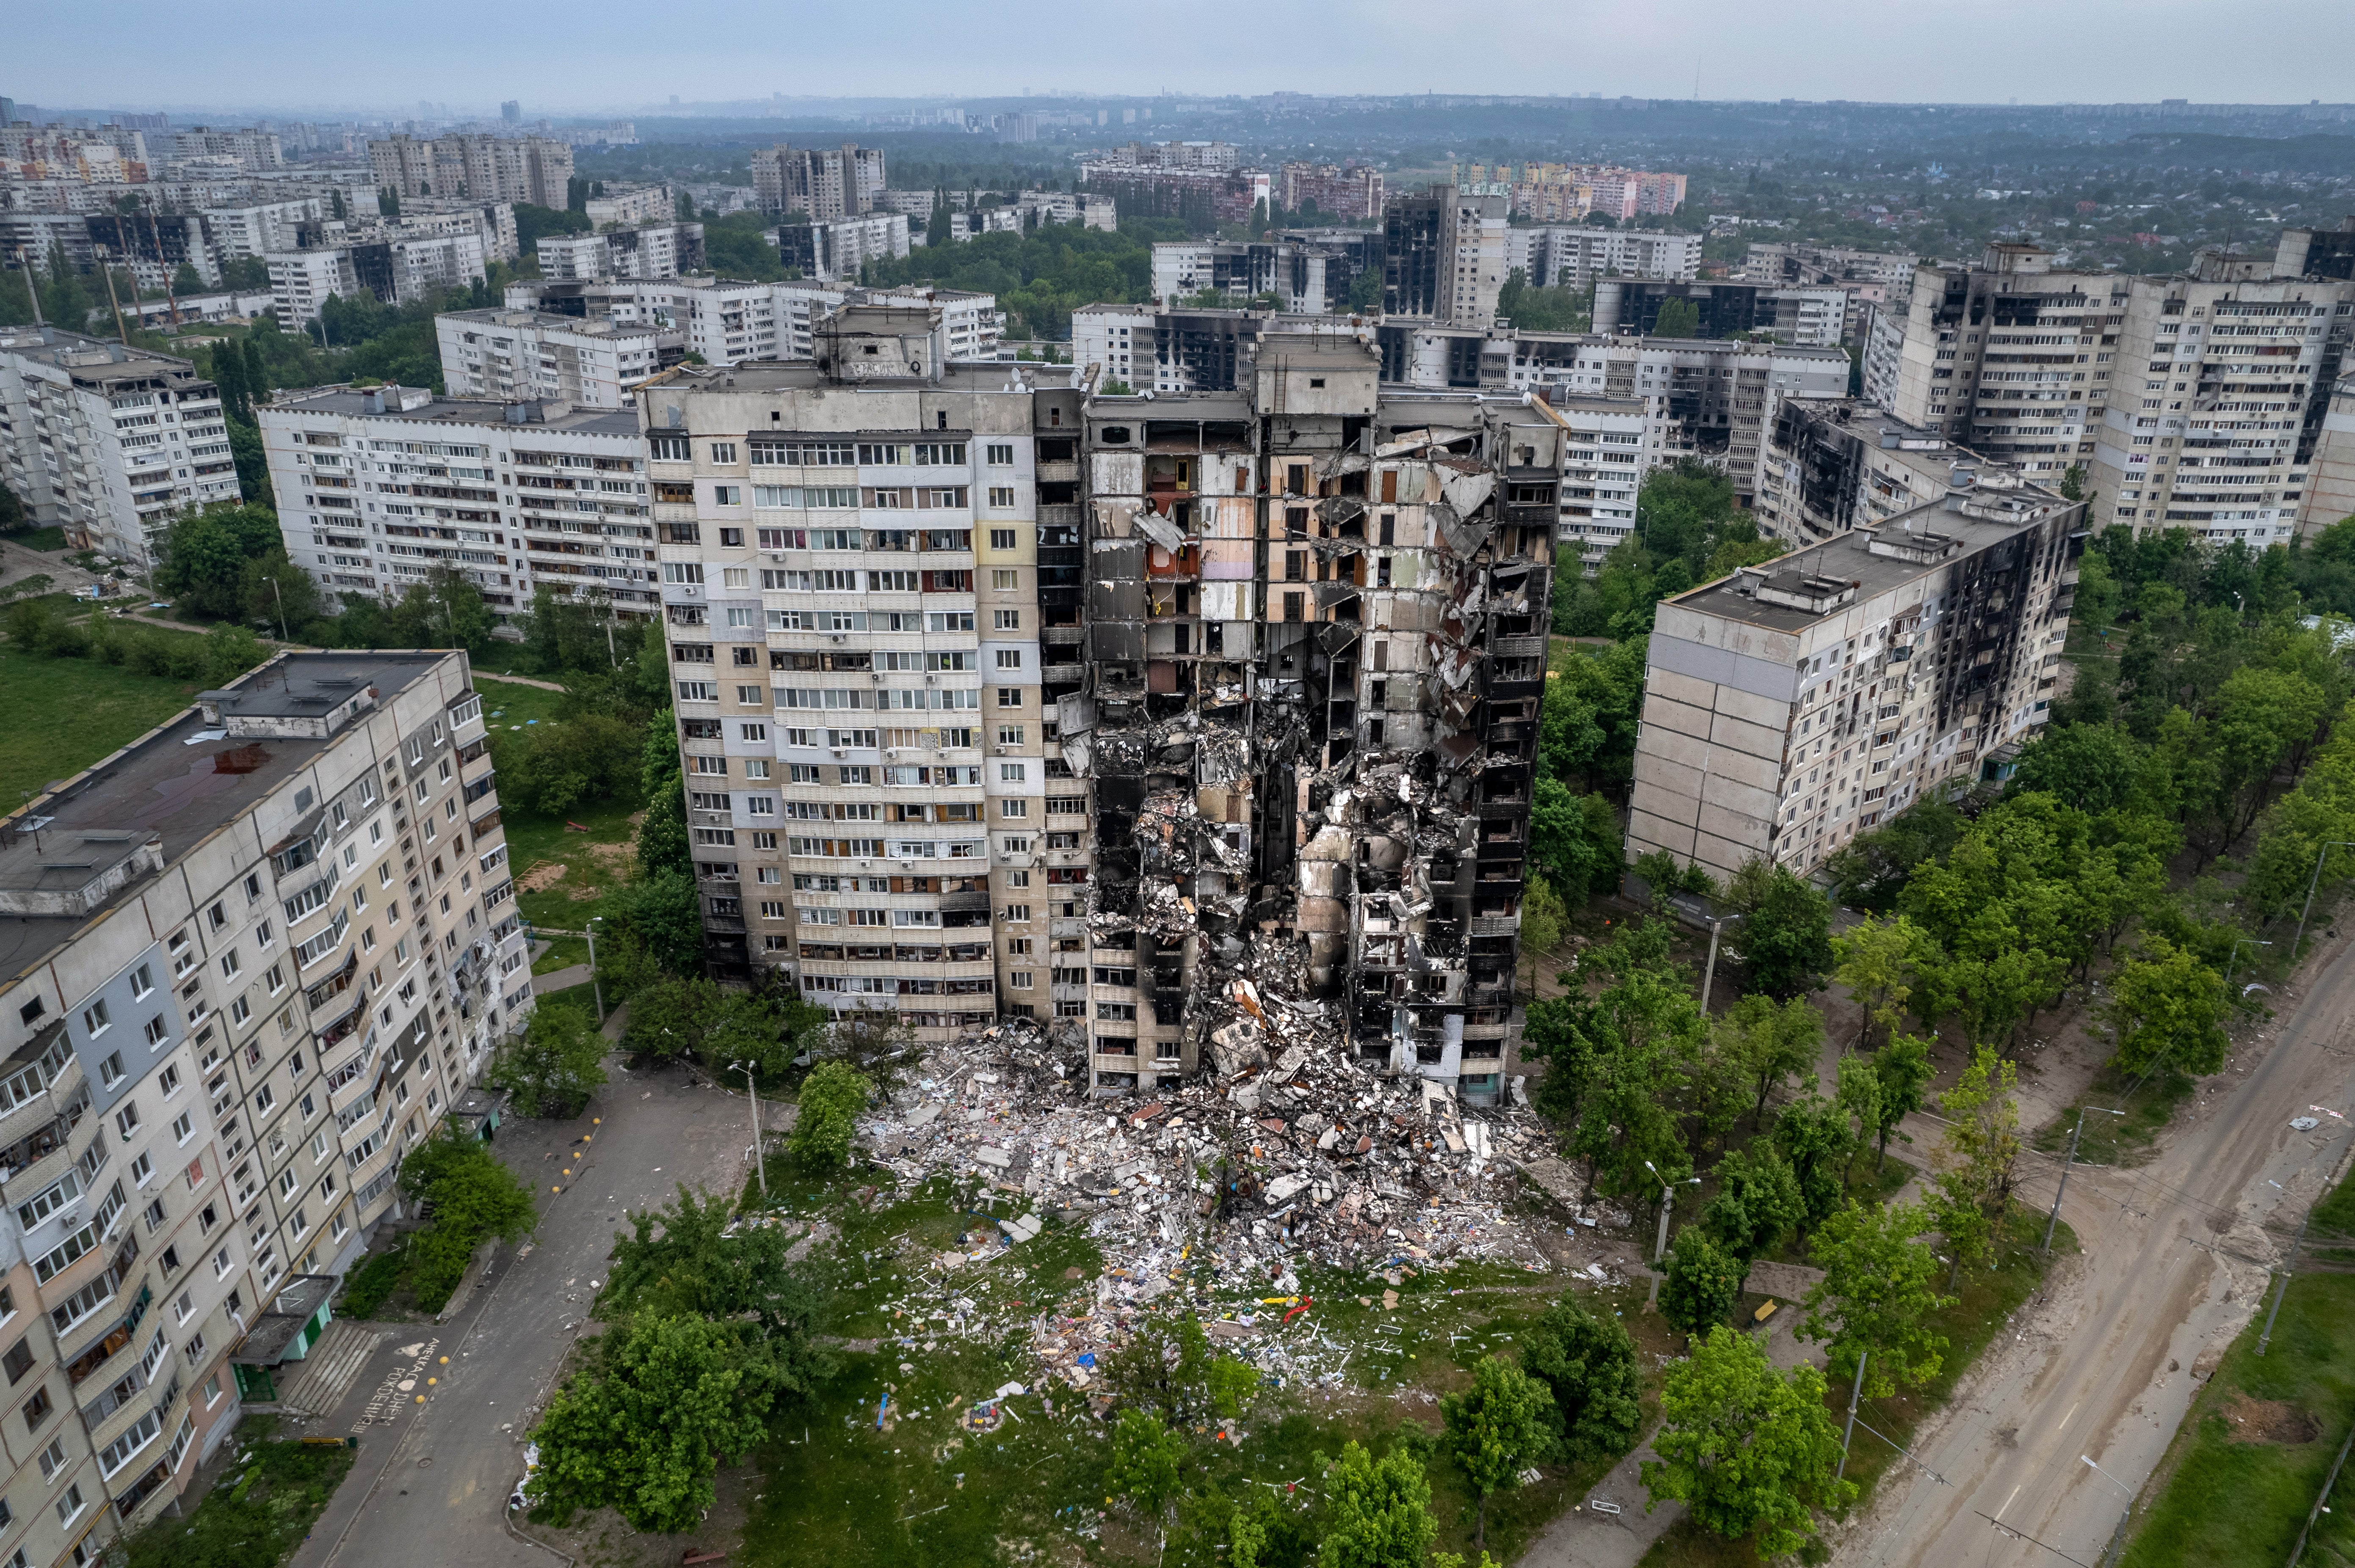 The bomb-damaged Kharkiv skyline